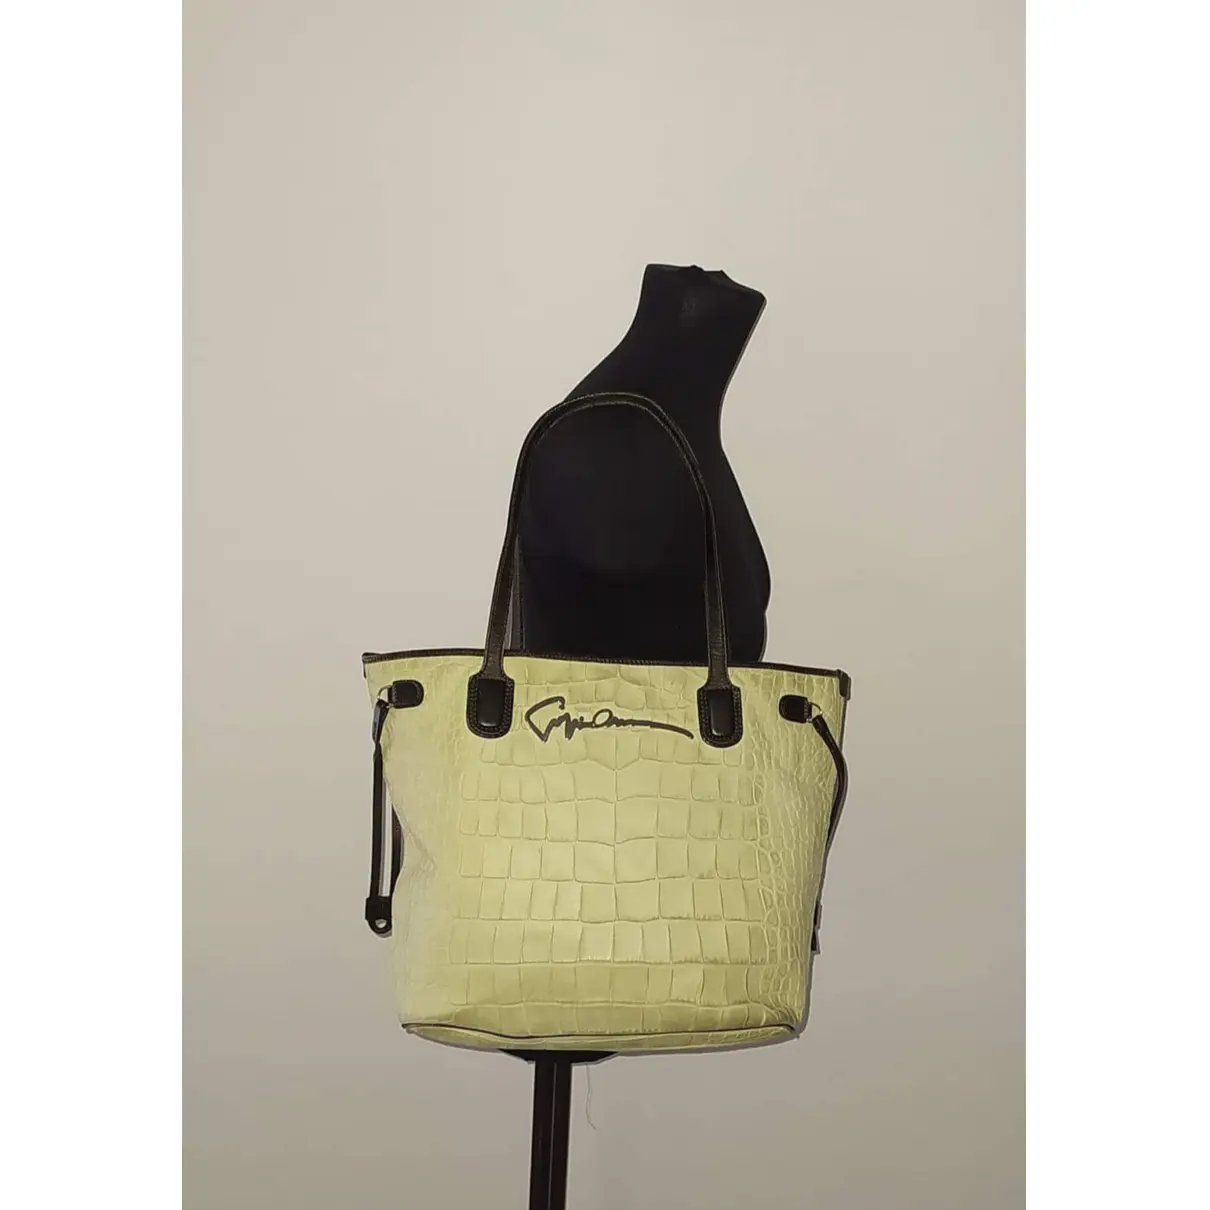 Buy Giorgio Armani Leather handbag online